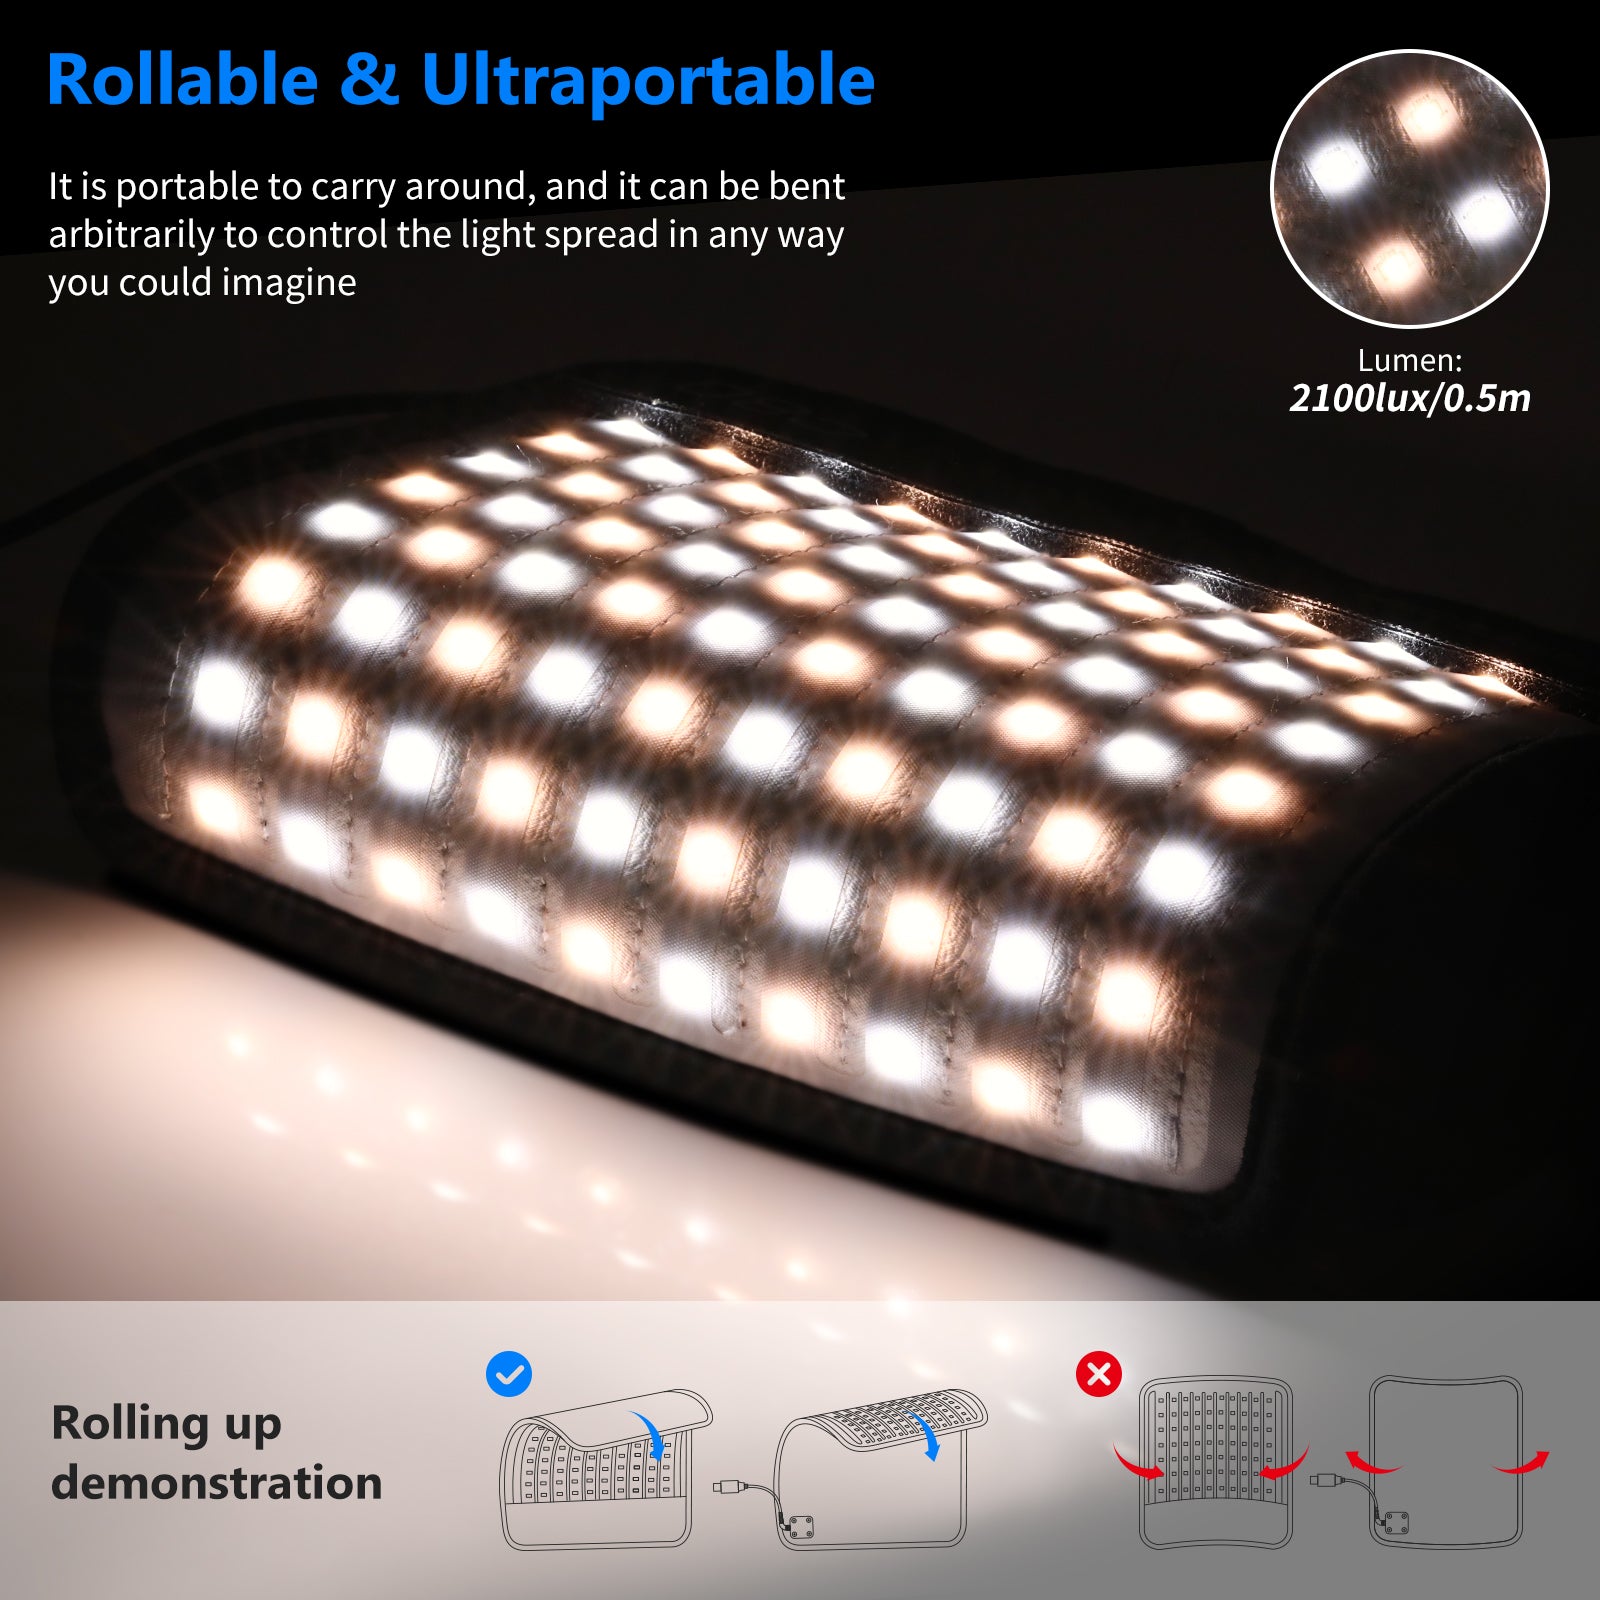 Neewer C80 Foldable LED Light Panel Kit